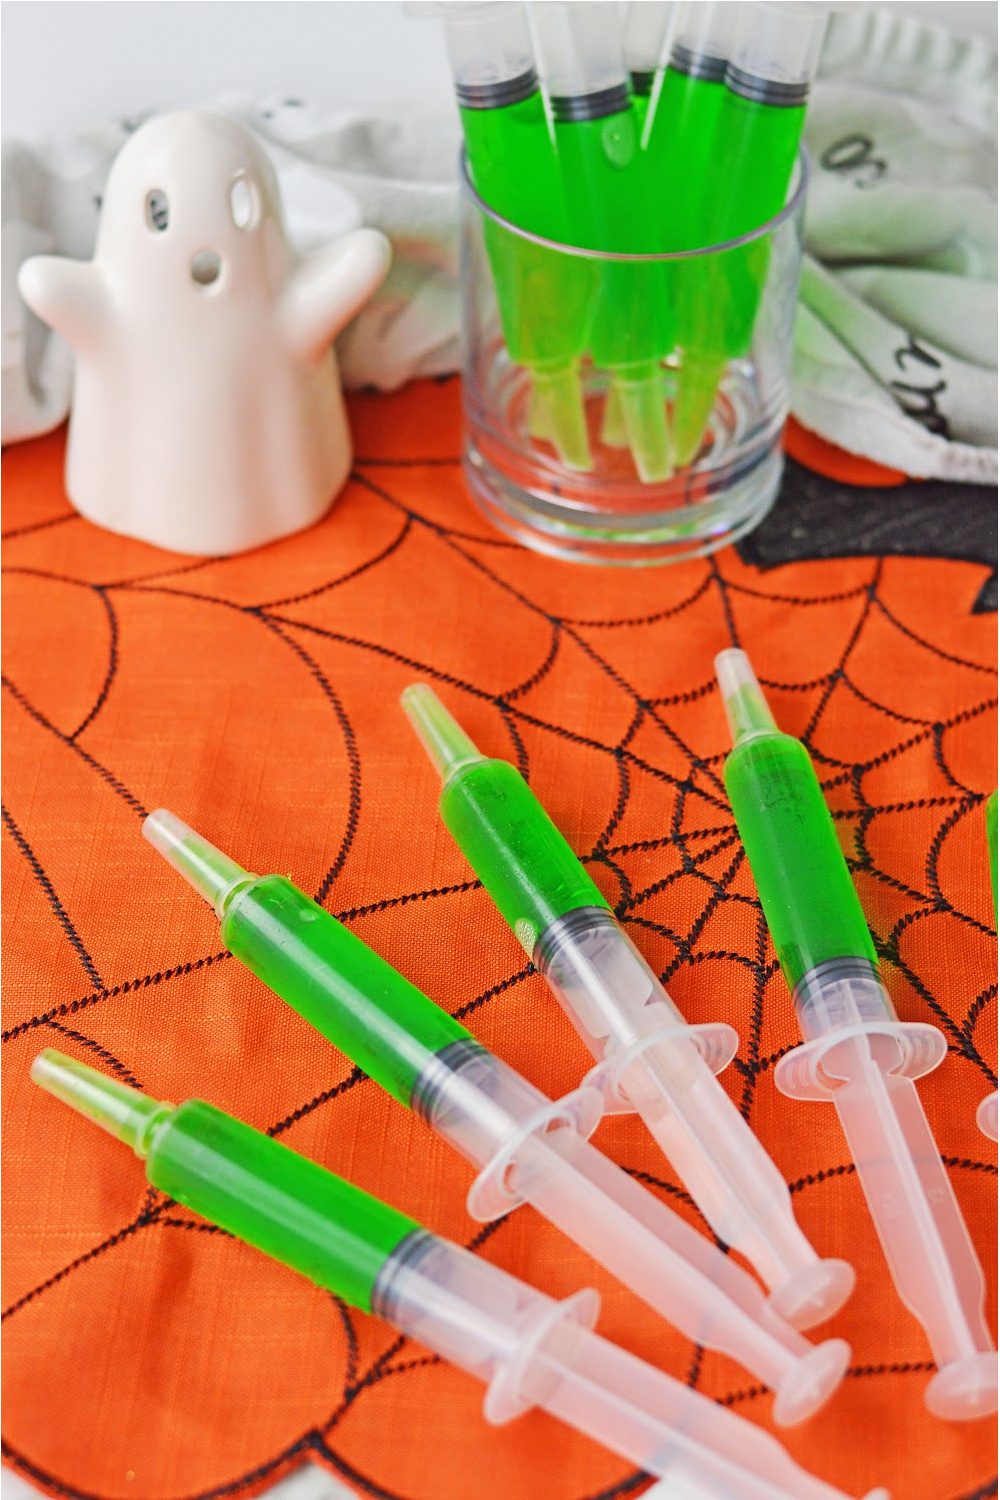 Green syringe jello shots laying on an orange spiderweb placemat.